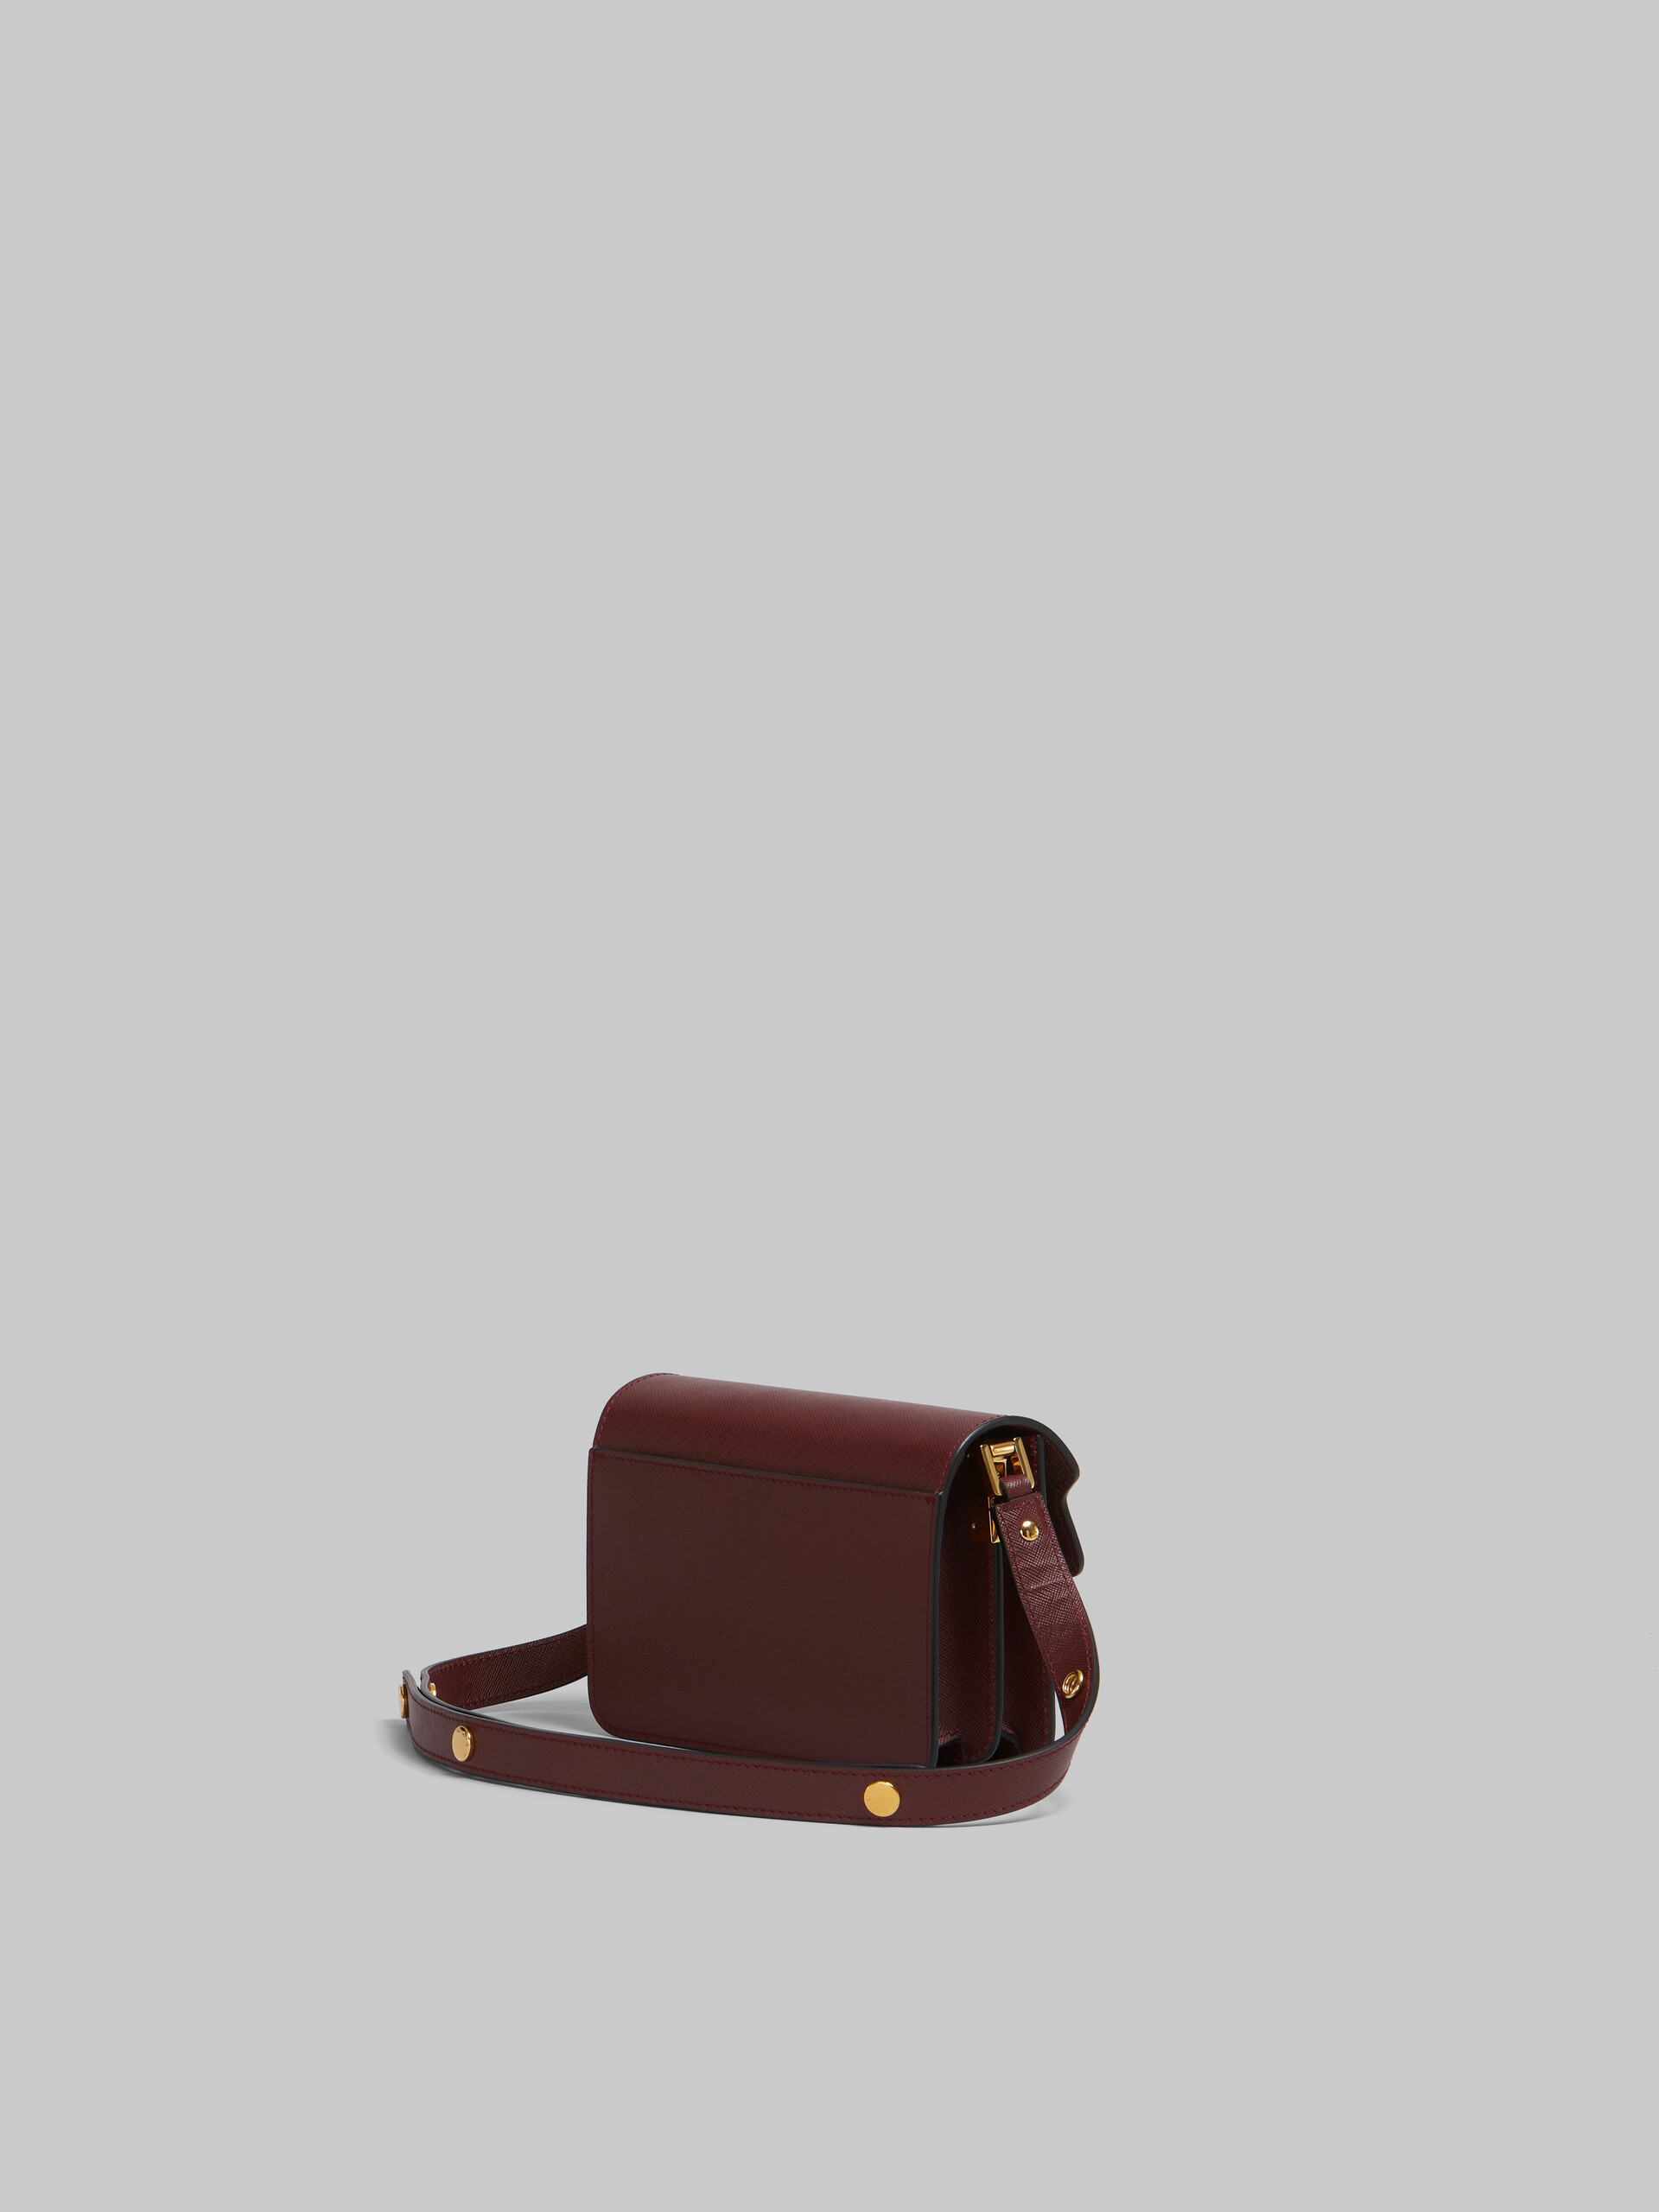 Mini sac Trunk en cuir Saffiano marron - Sacs portés épaule - Image 3